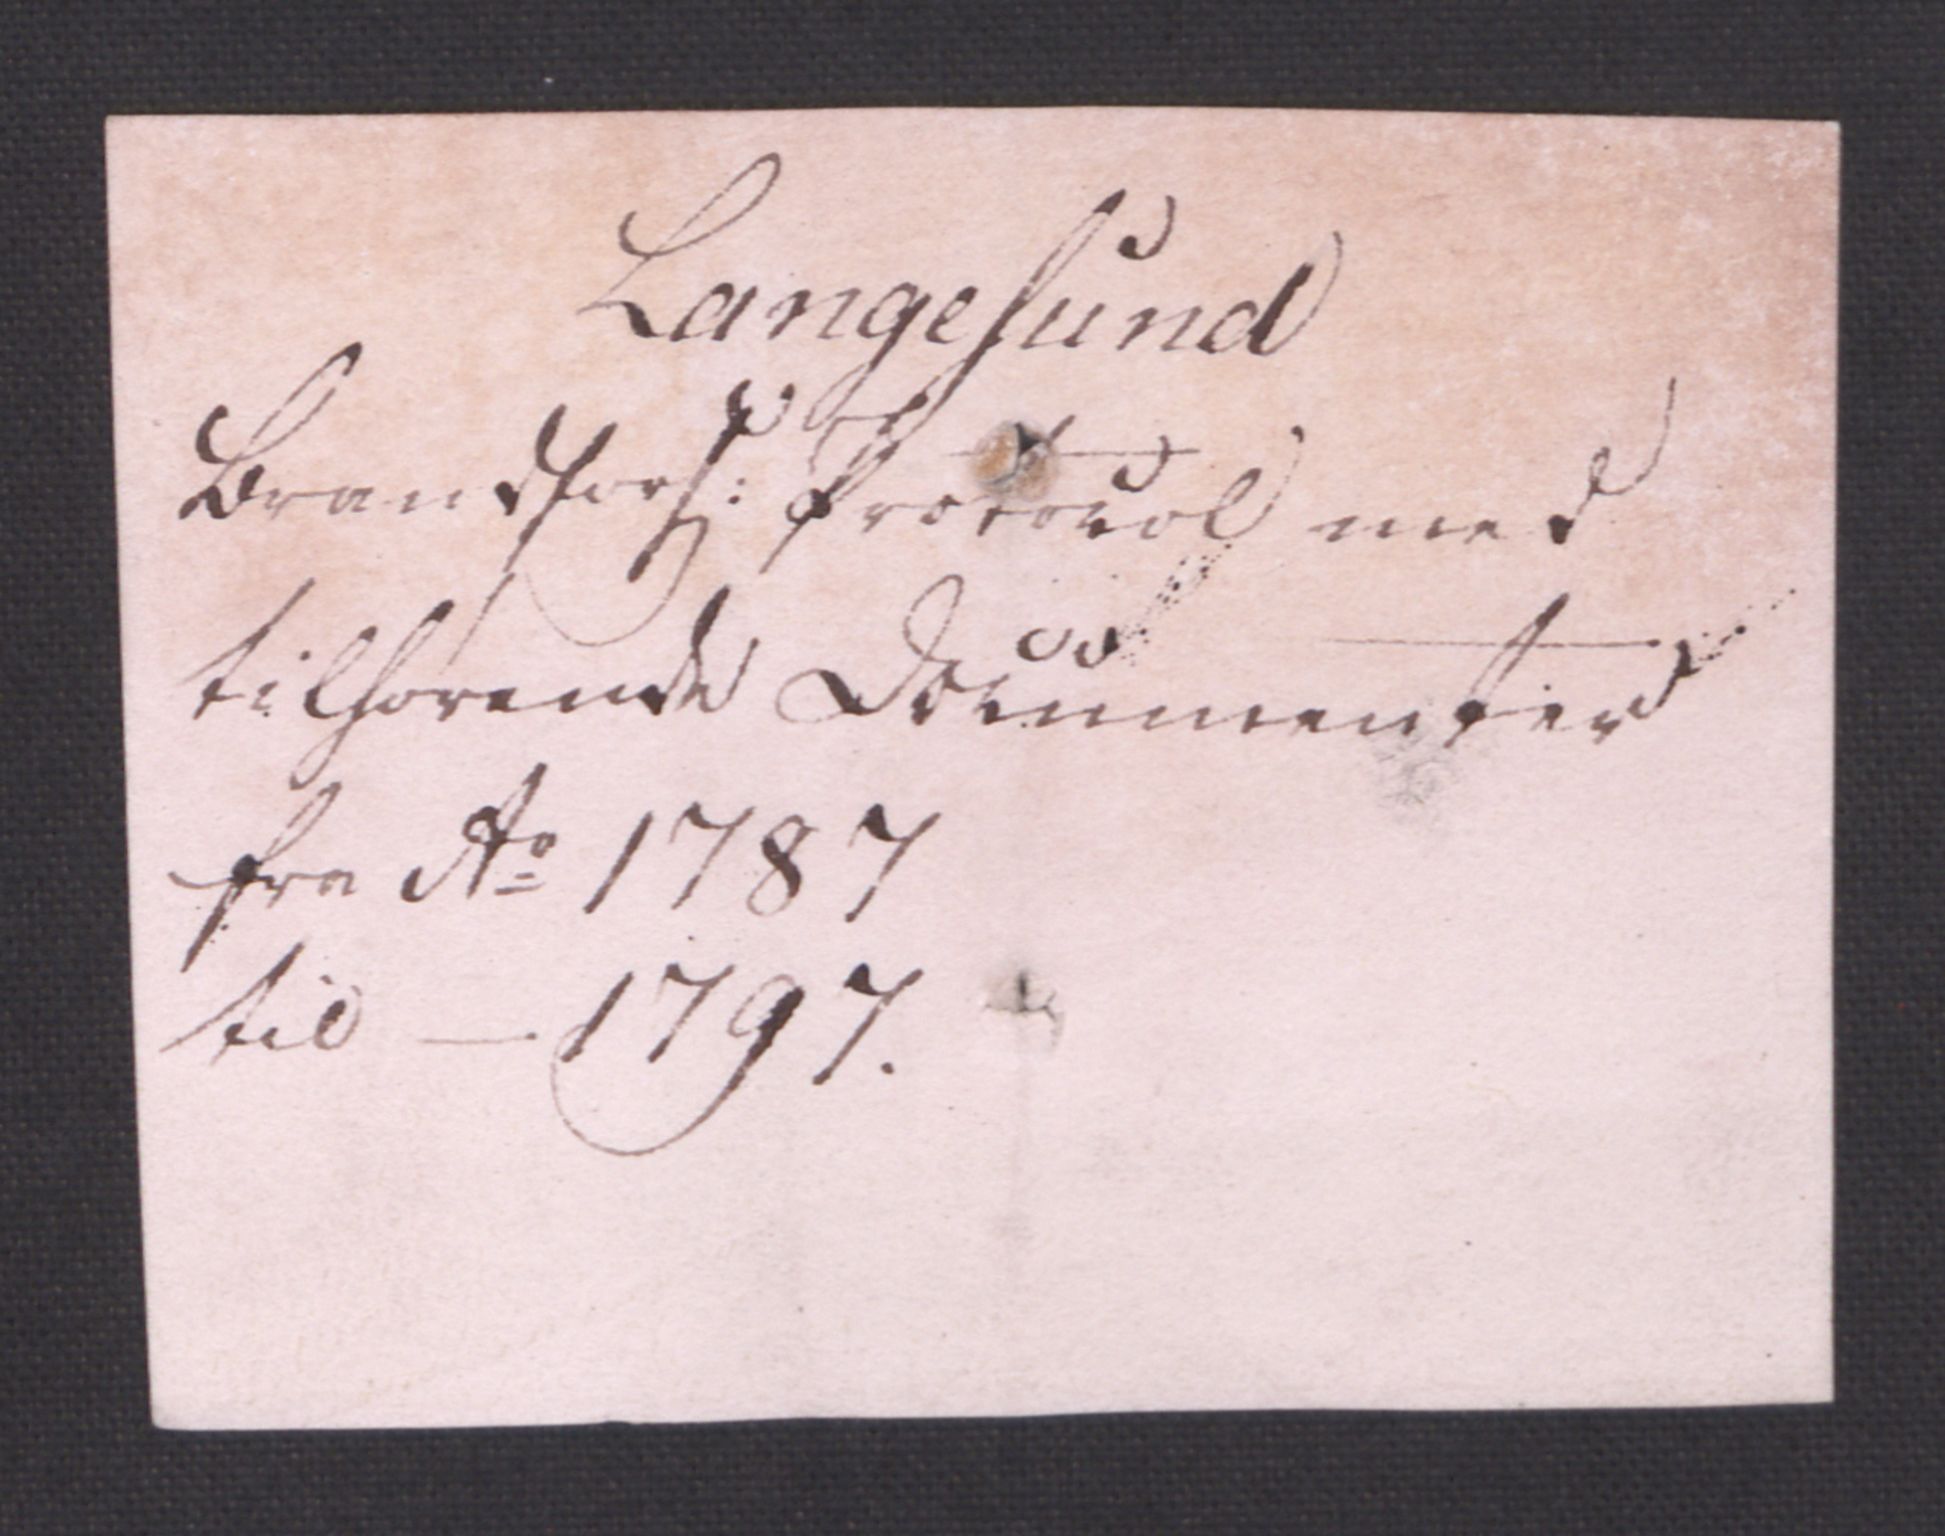 Kommersekollegiet, Brannforsikringskontoret 1767-1814, RA/EA-5458/F/Fa/L0033/0002: Langesund / Branntakstprotokoll, 1787